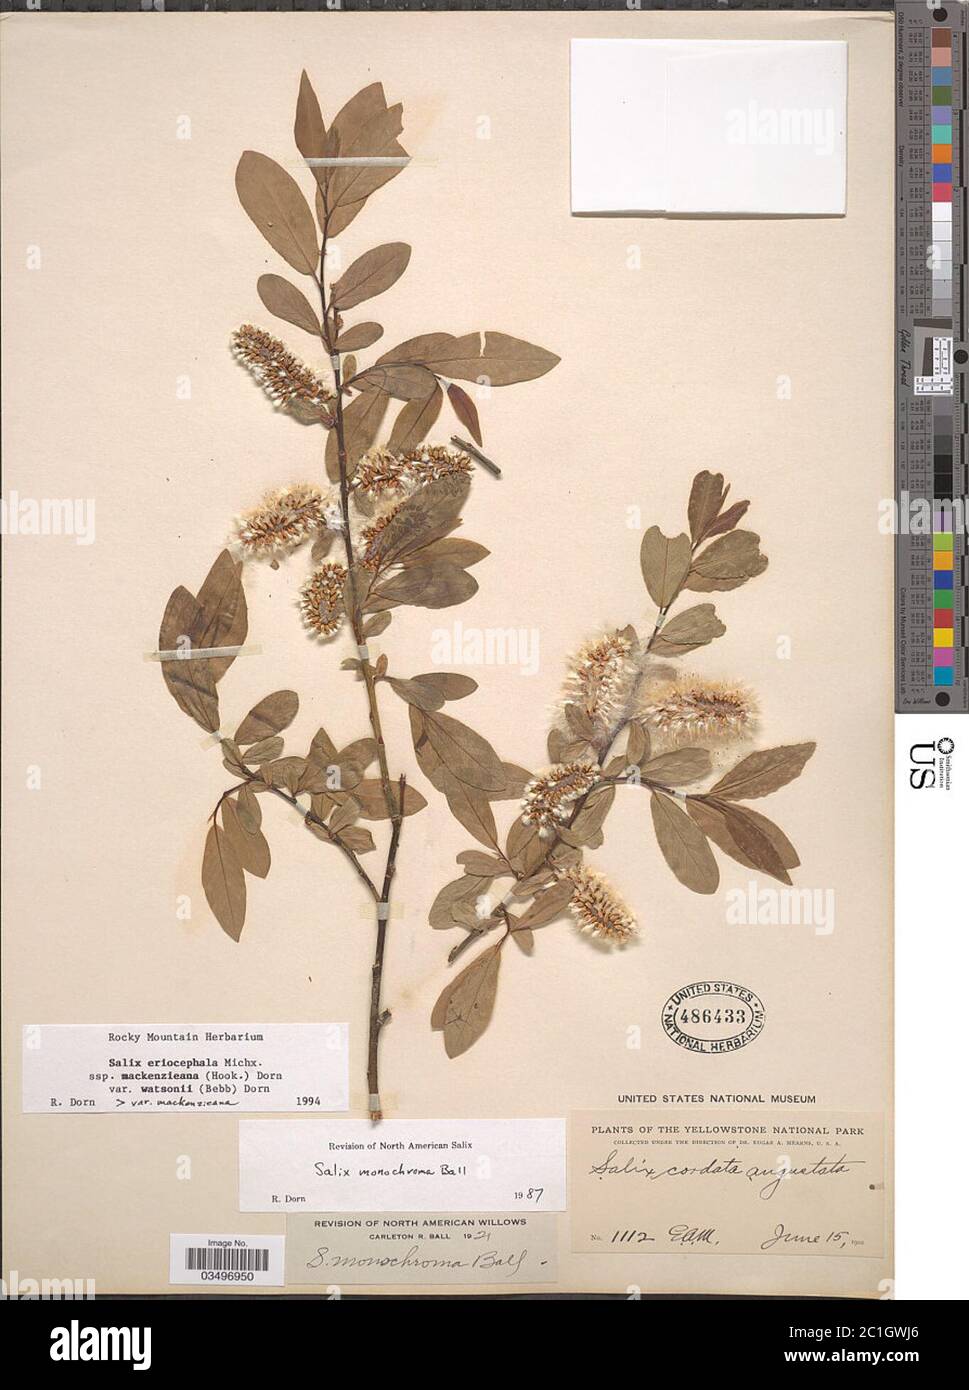 Salix eriocephala subsp mackenzieana var watsonii Salix eriocephala subsp mackenzieana var watsonii. Stock Photo